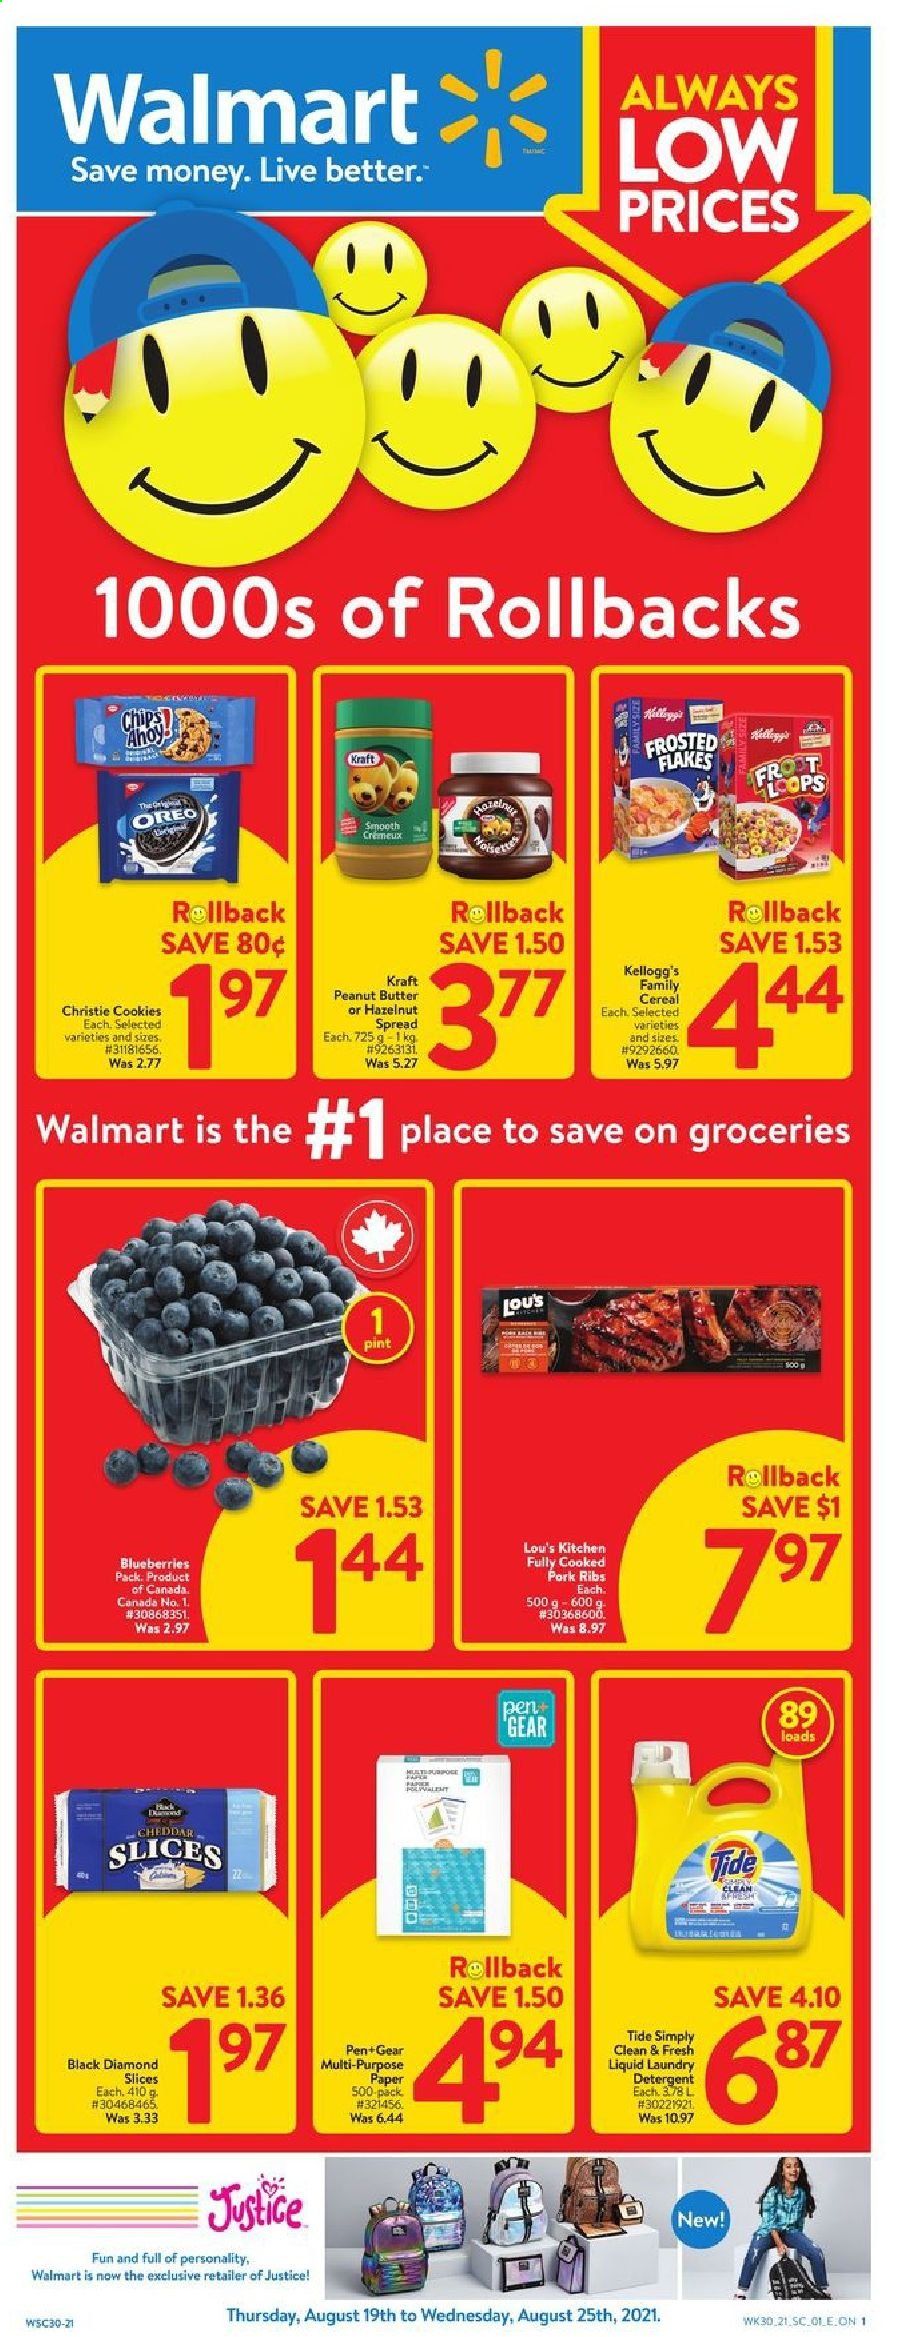 thumbnail - Circulaire Walmart - 19 Août 2021 - 25 Août 2021 - Produits soldés - Oreo, cookies, Kellogg's, Always, détergent. Page 1.